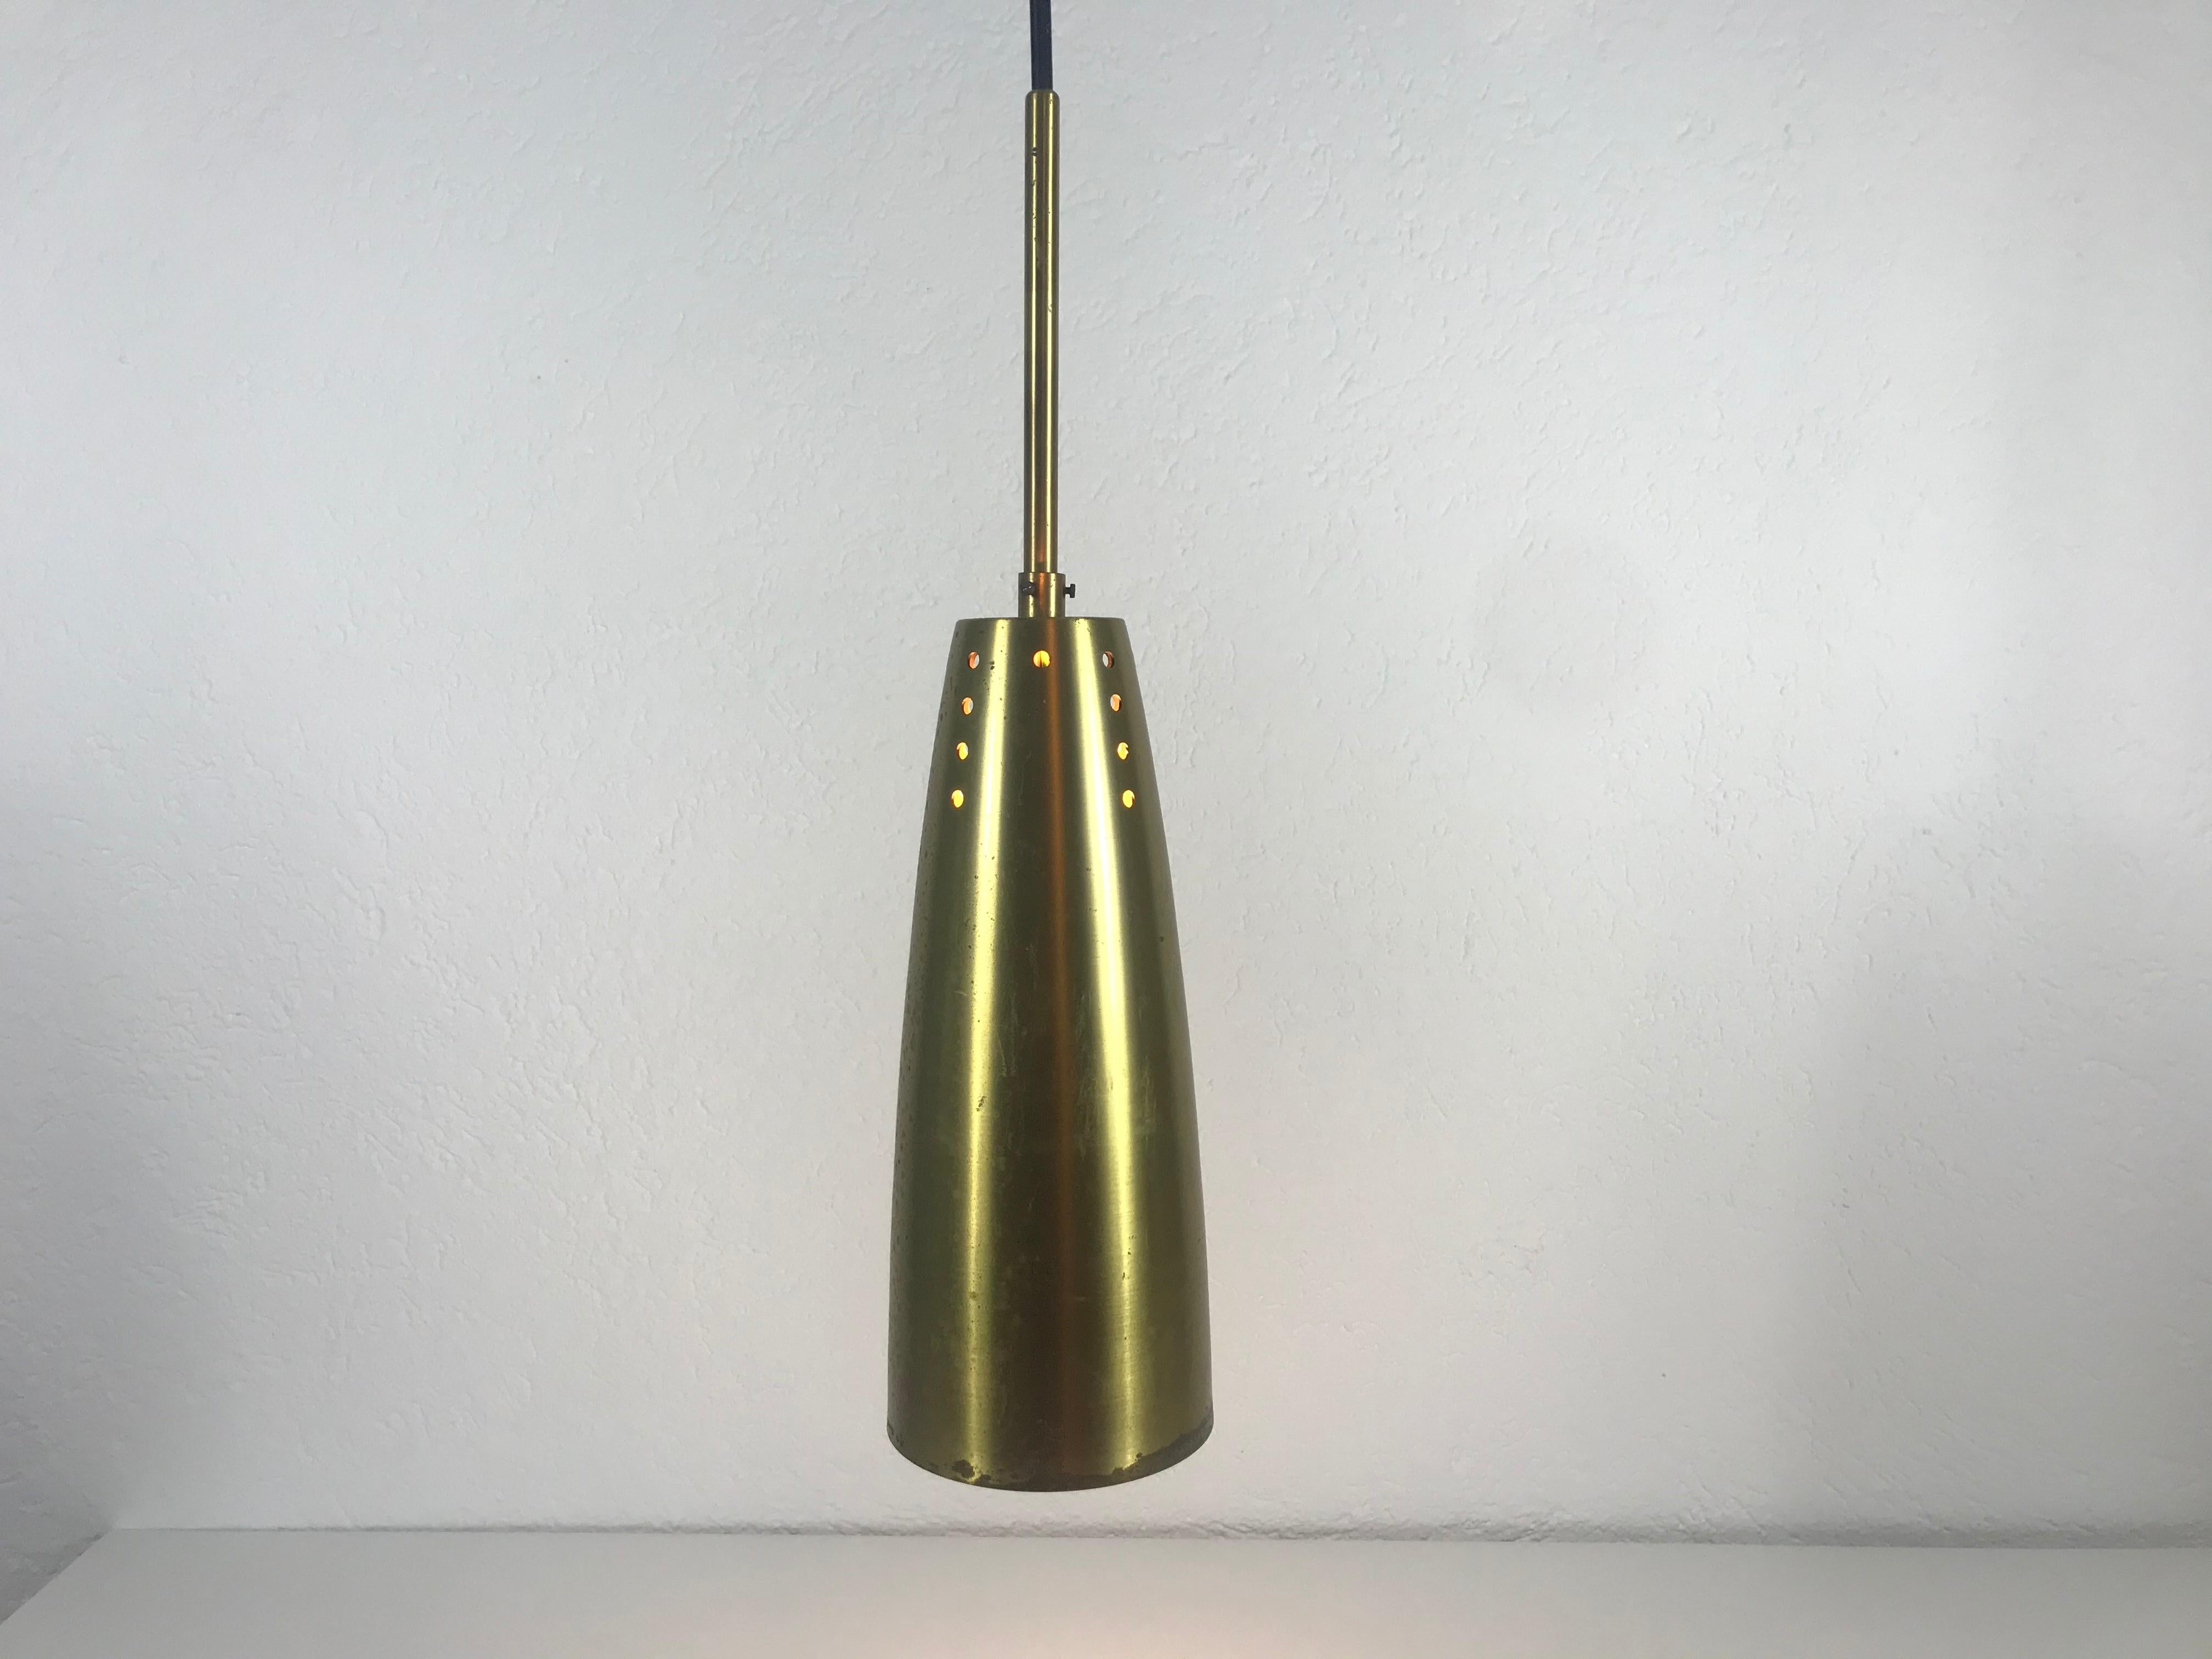 Set of 3 Full Brass Mid-Century Modern Pendant Lamps, 1950s, Germany For Sale 5